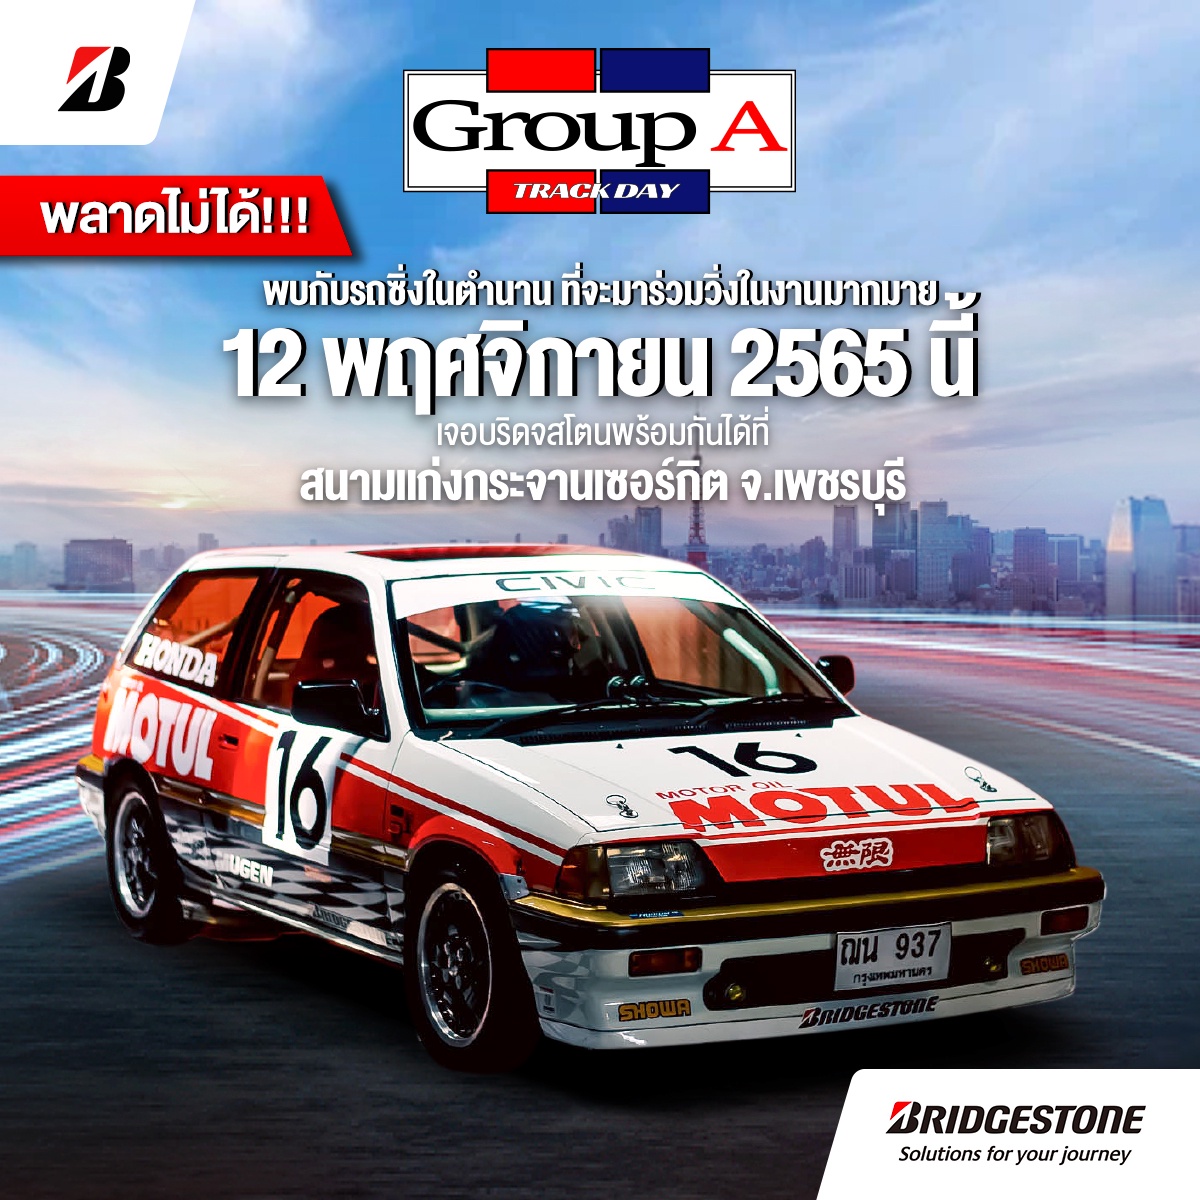 Bridgestone Invites the Legendary Racing Car Enthusiasts to Join the Bridgestone Group A Track Day Event